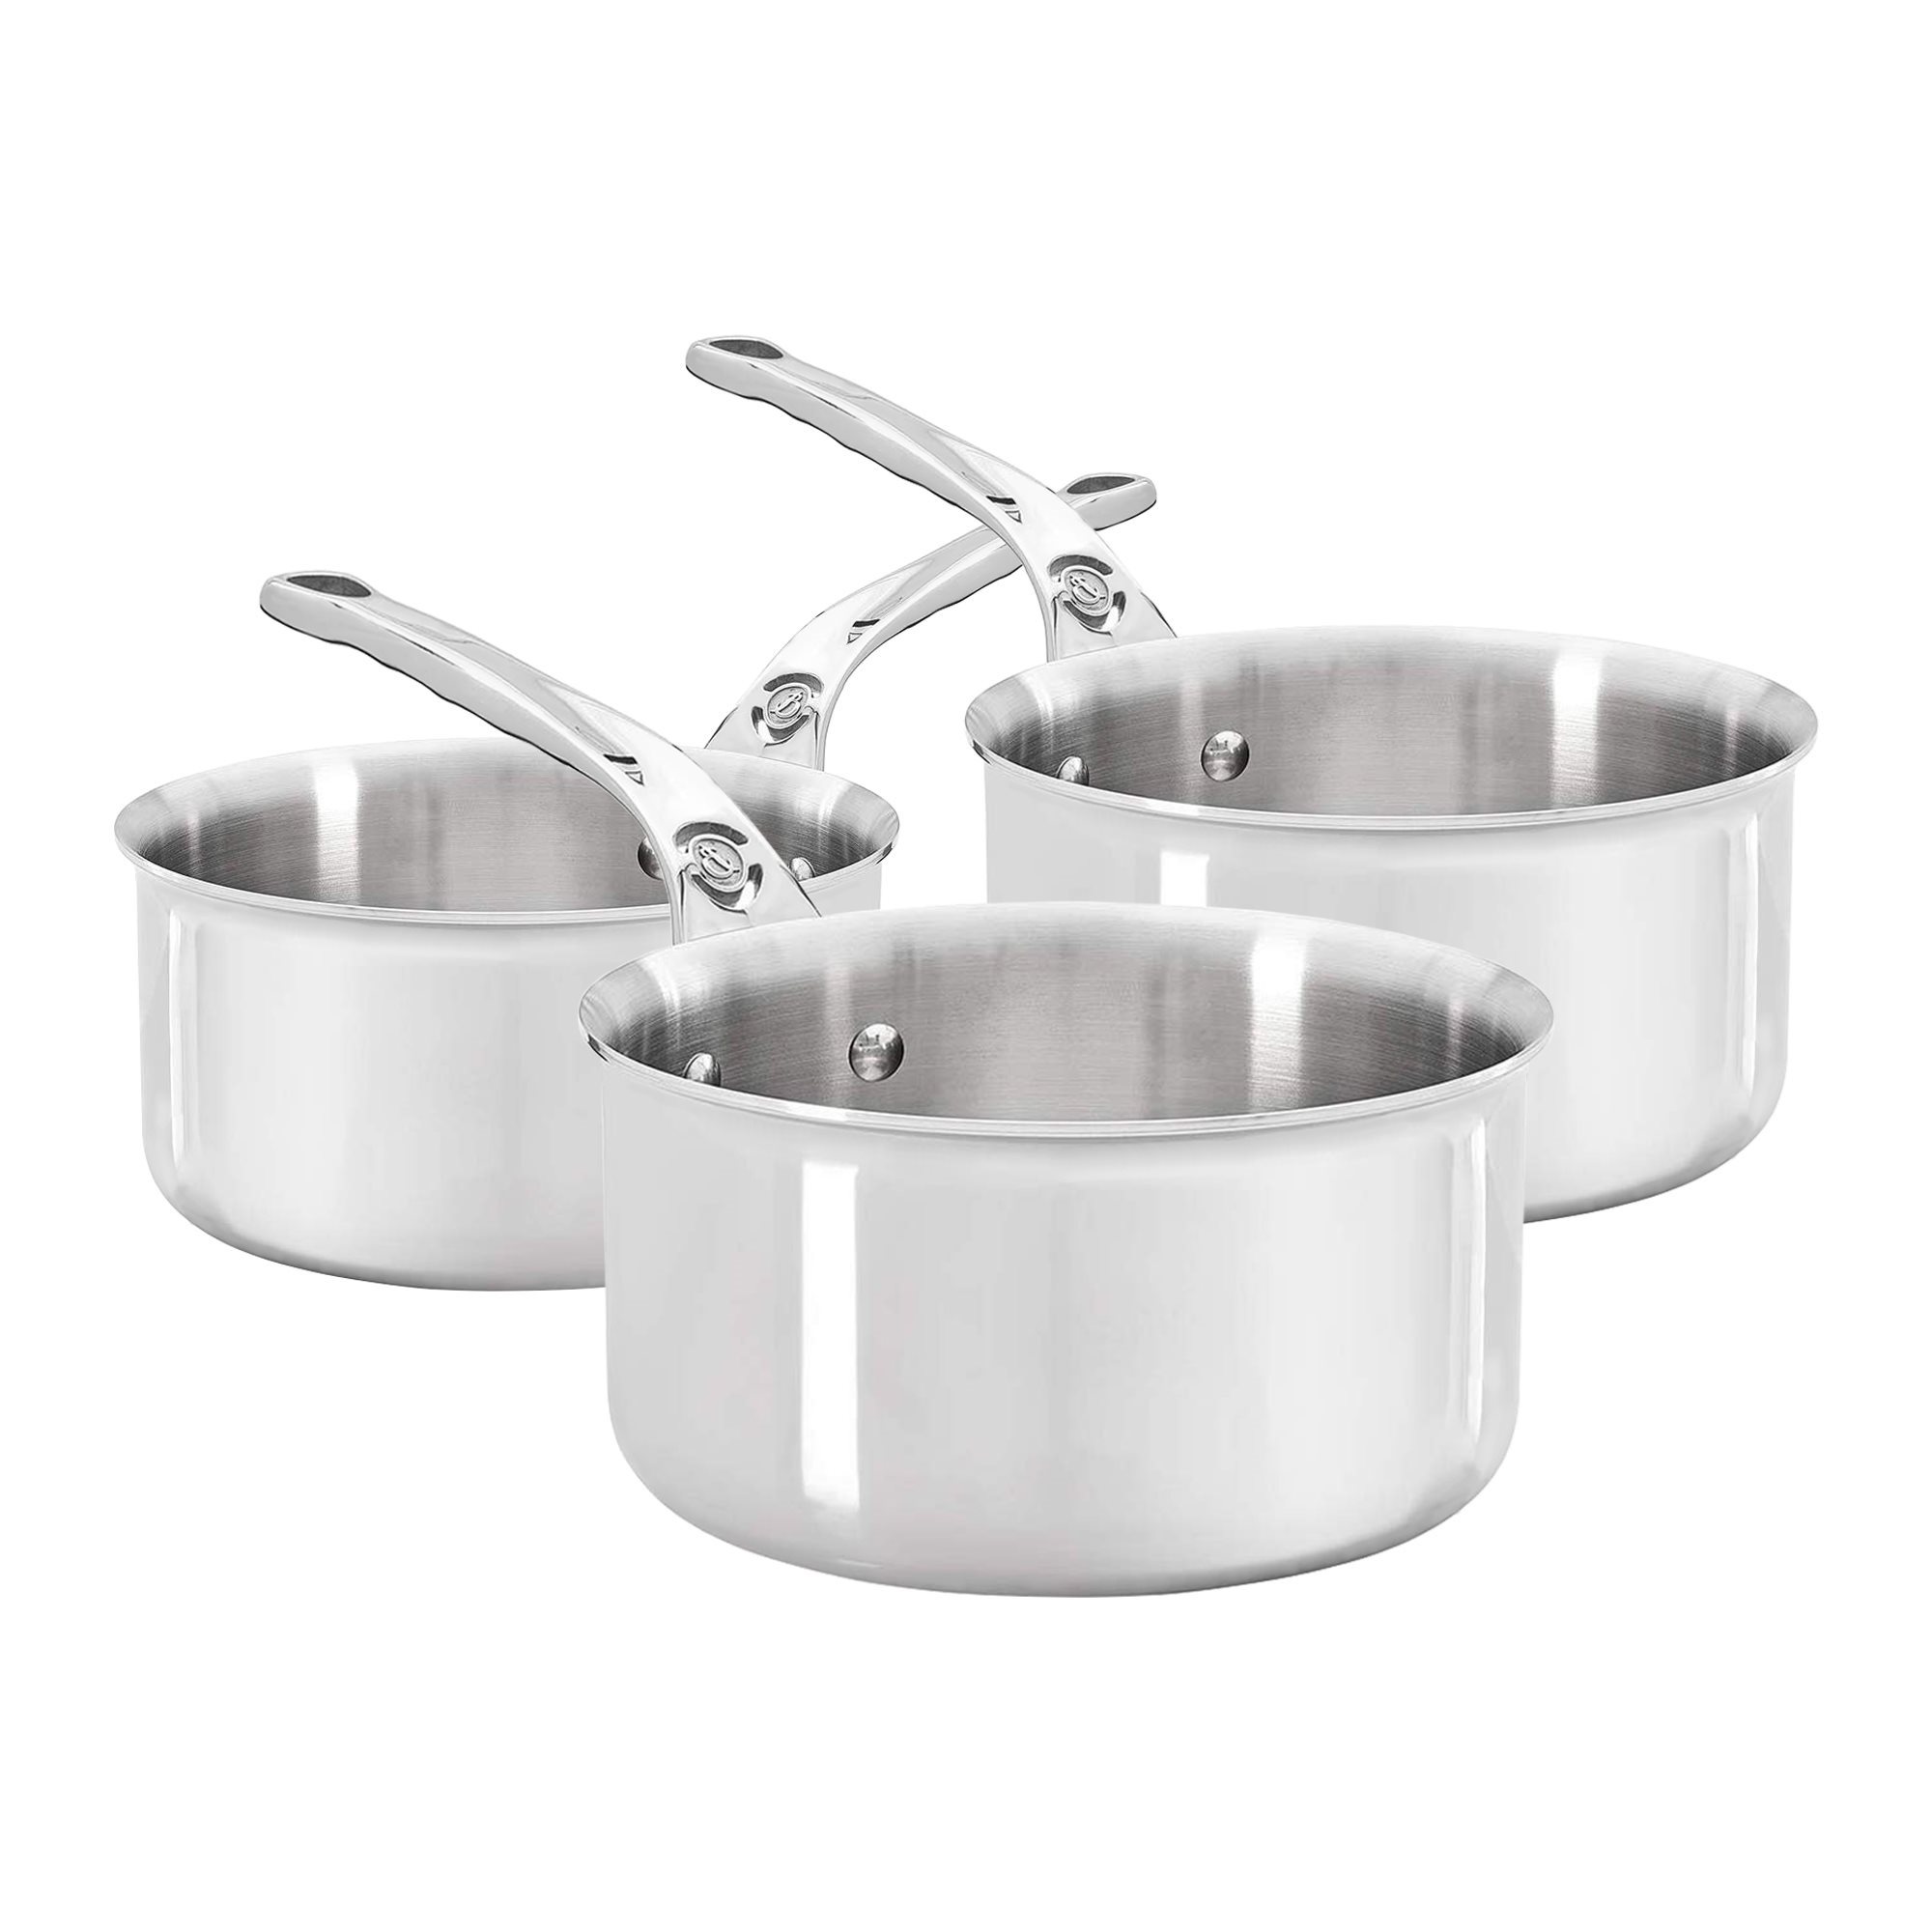 Set of 3Affinity saucepans, stainless steel - de Buyer brand